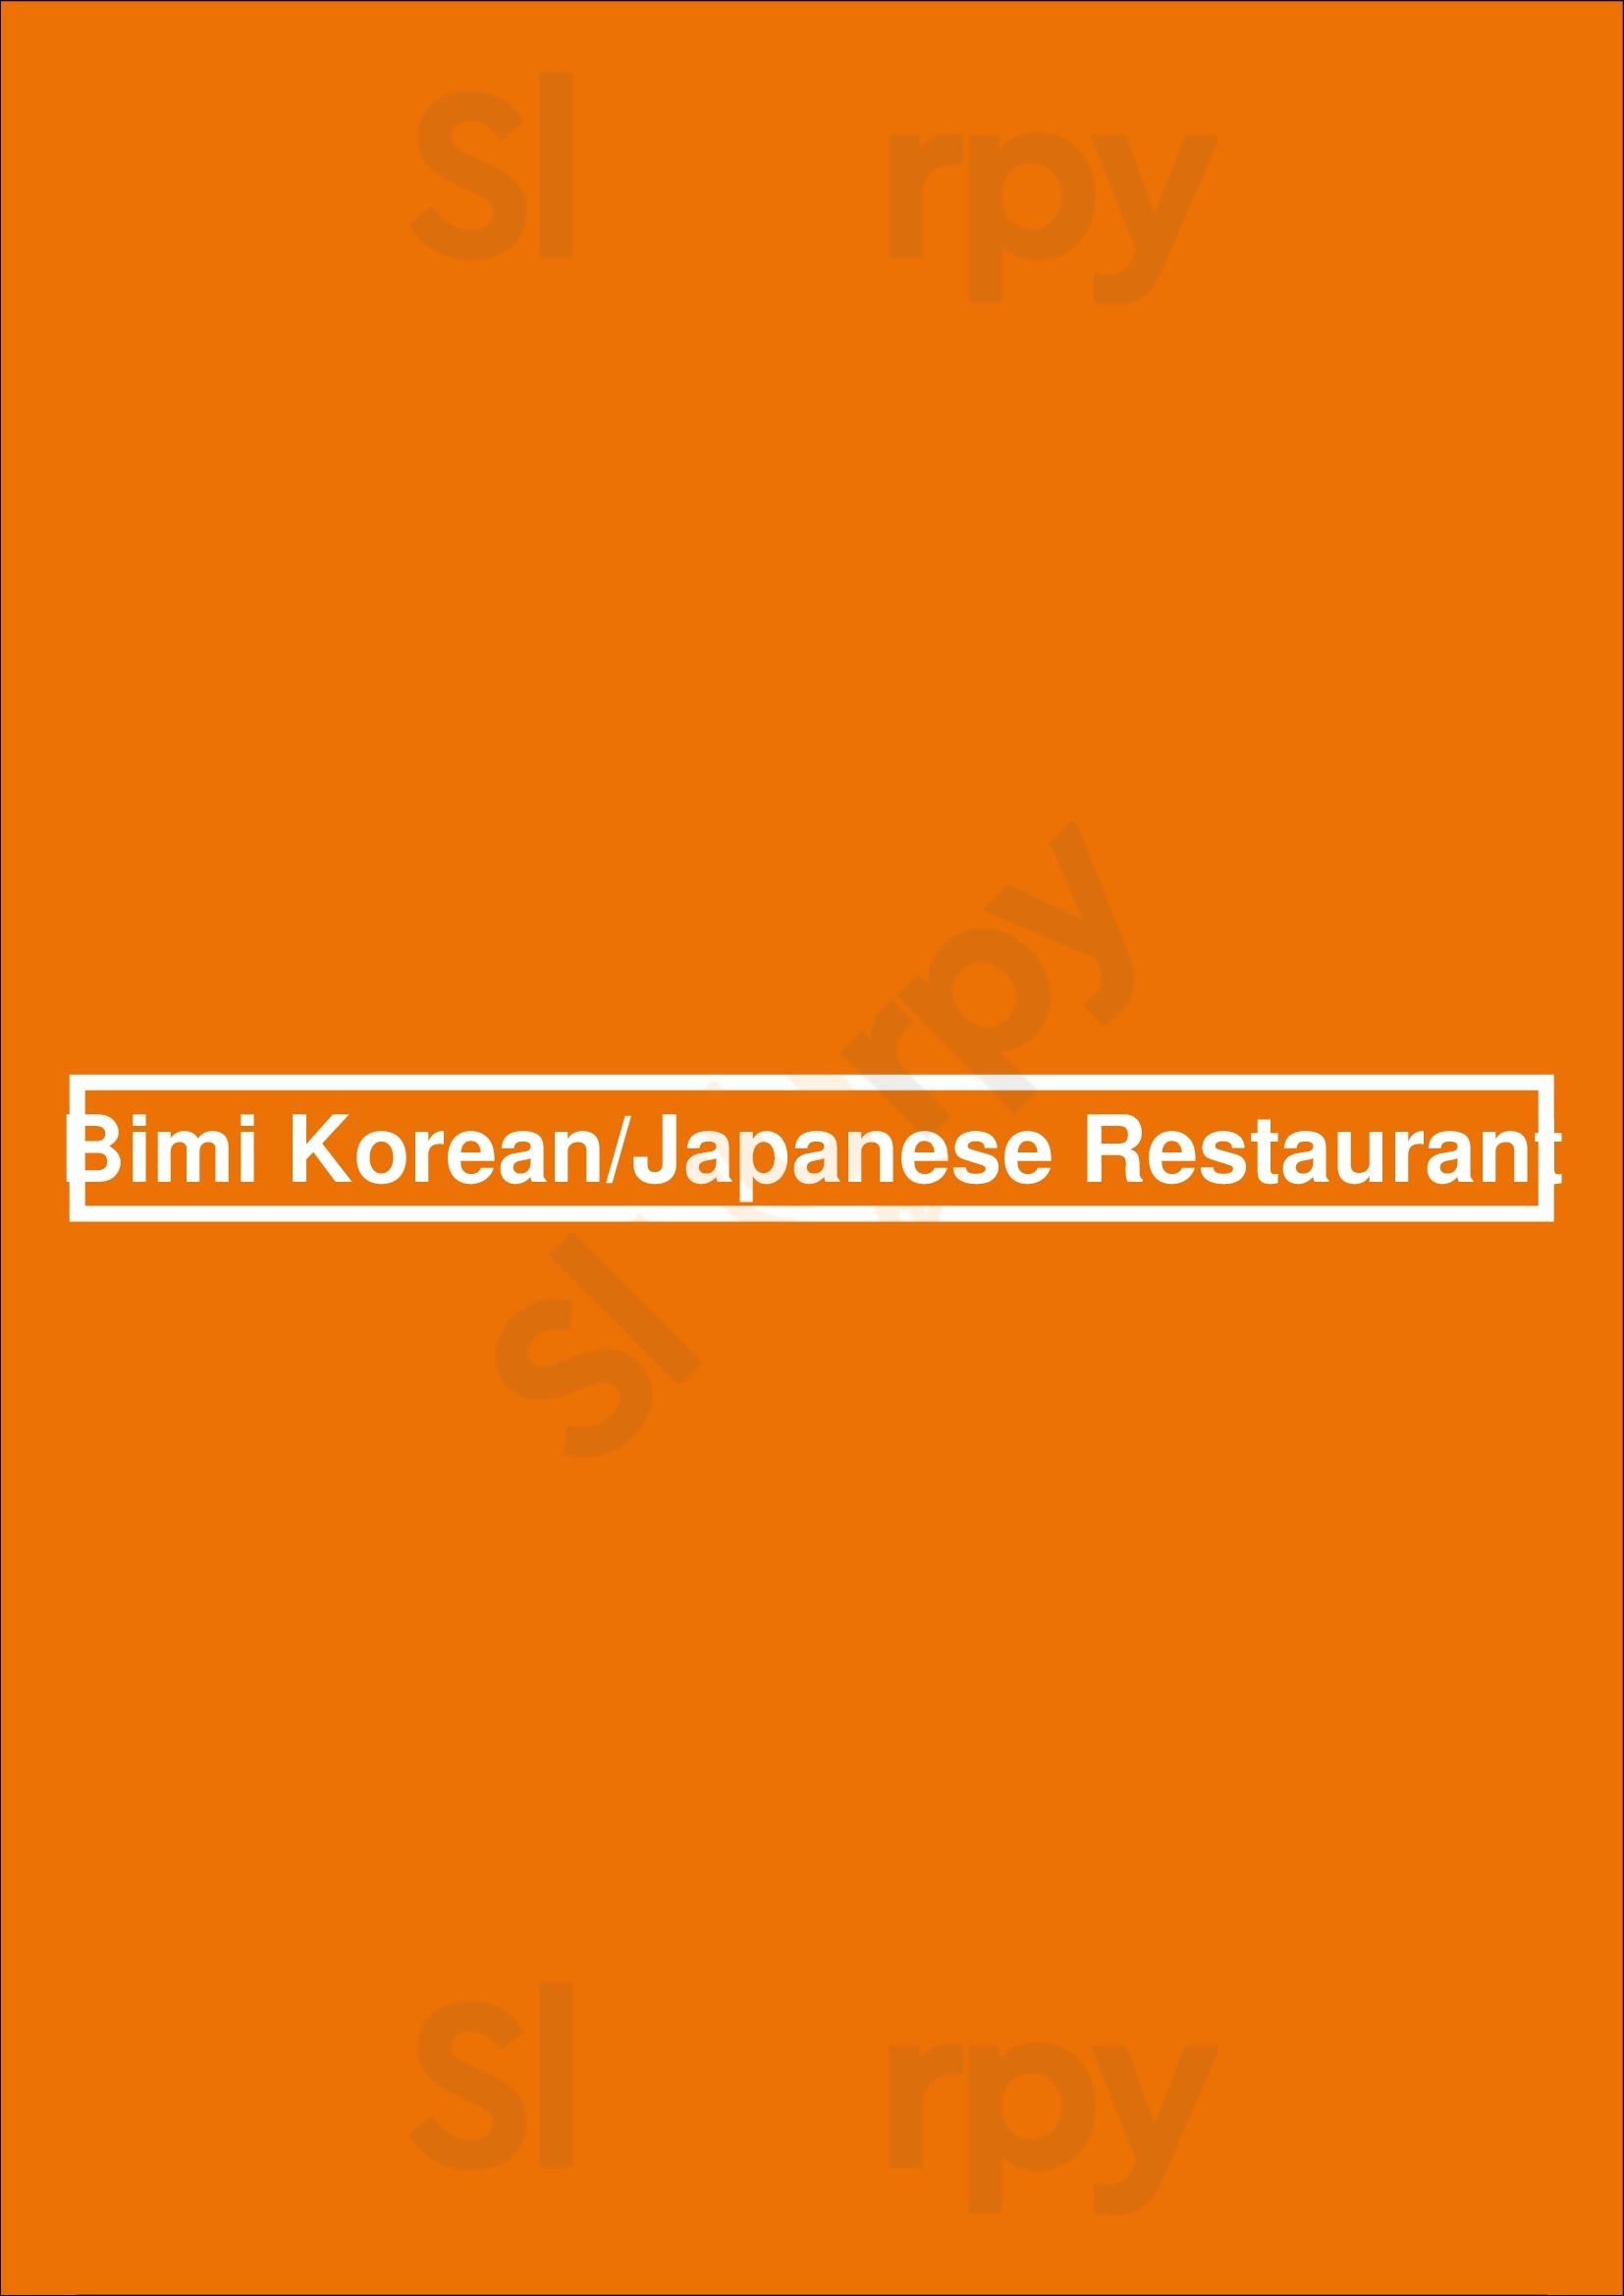 Bimi Korean/japanese Restaurant Winnipeg Menu - 1